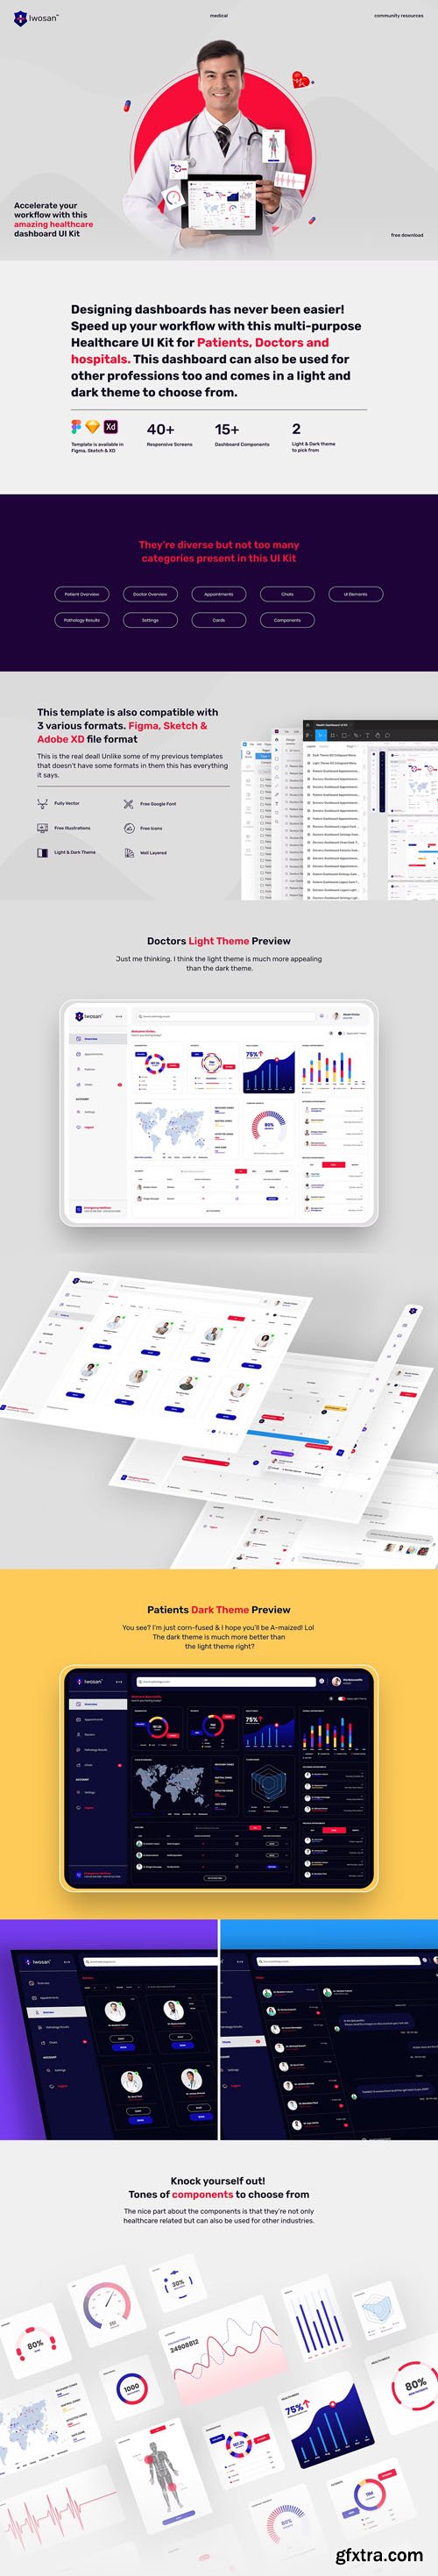 Amazing Healthcare Dashboard UI Kit [40+ Screens]